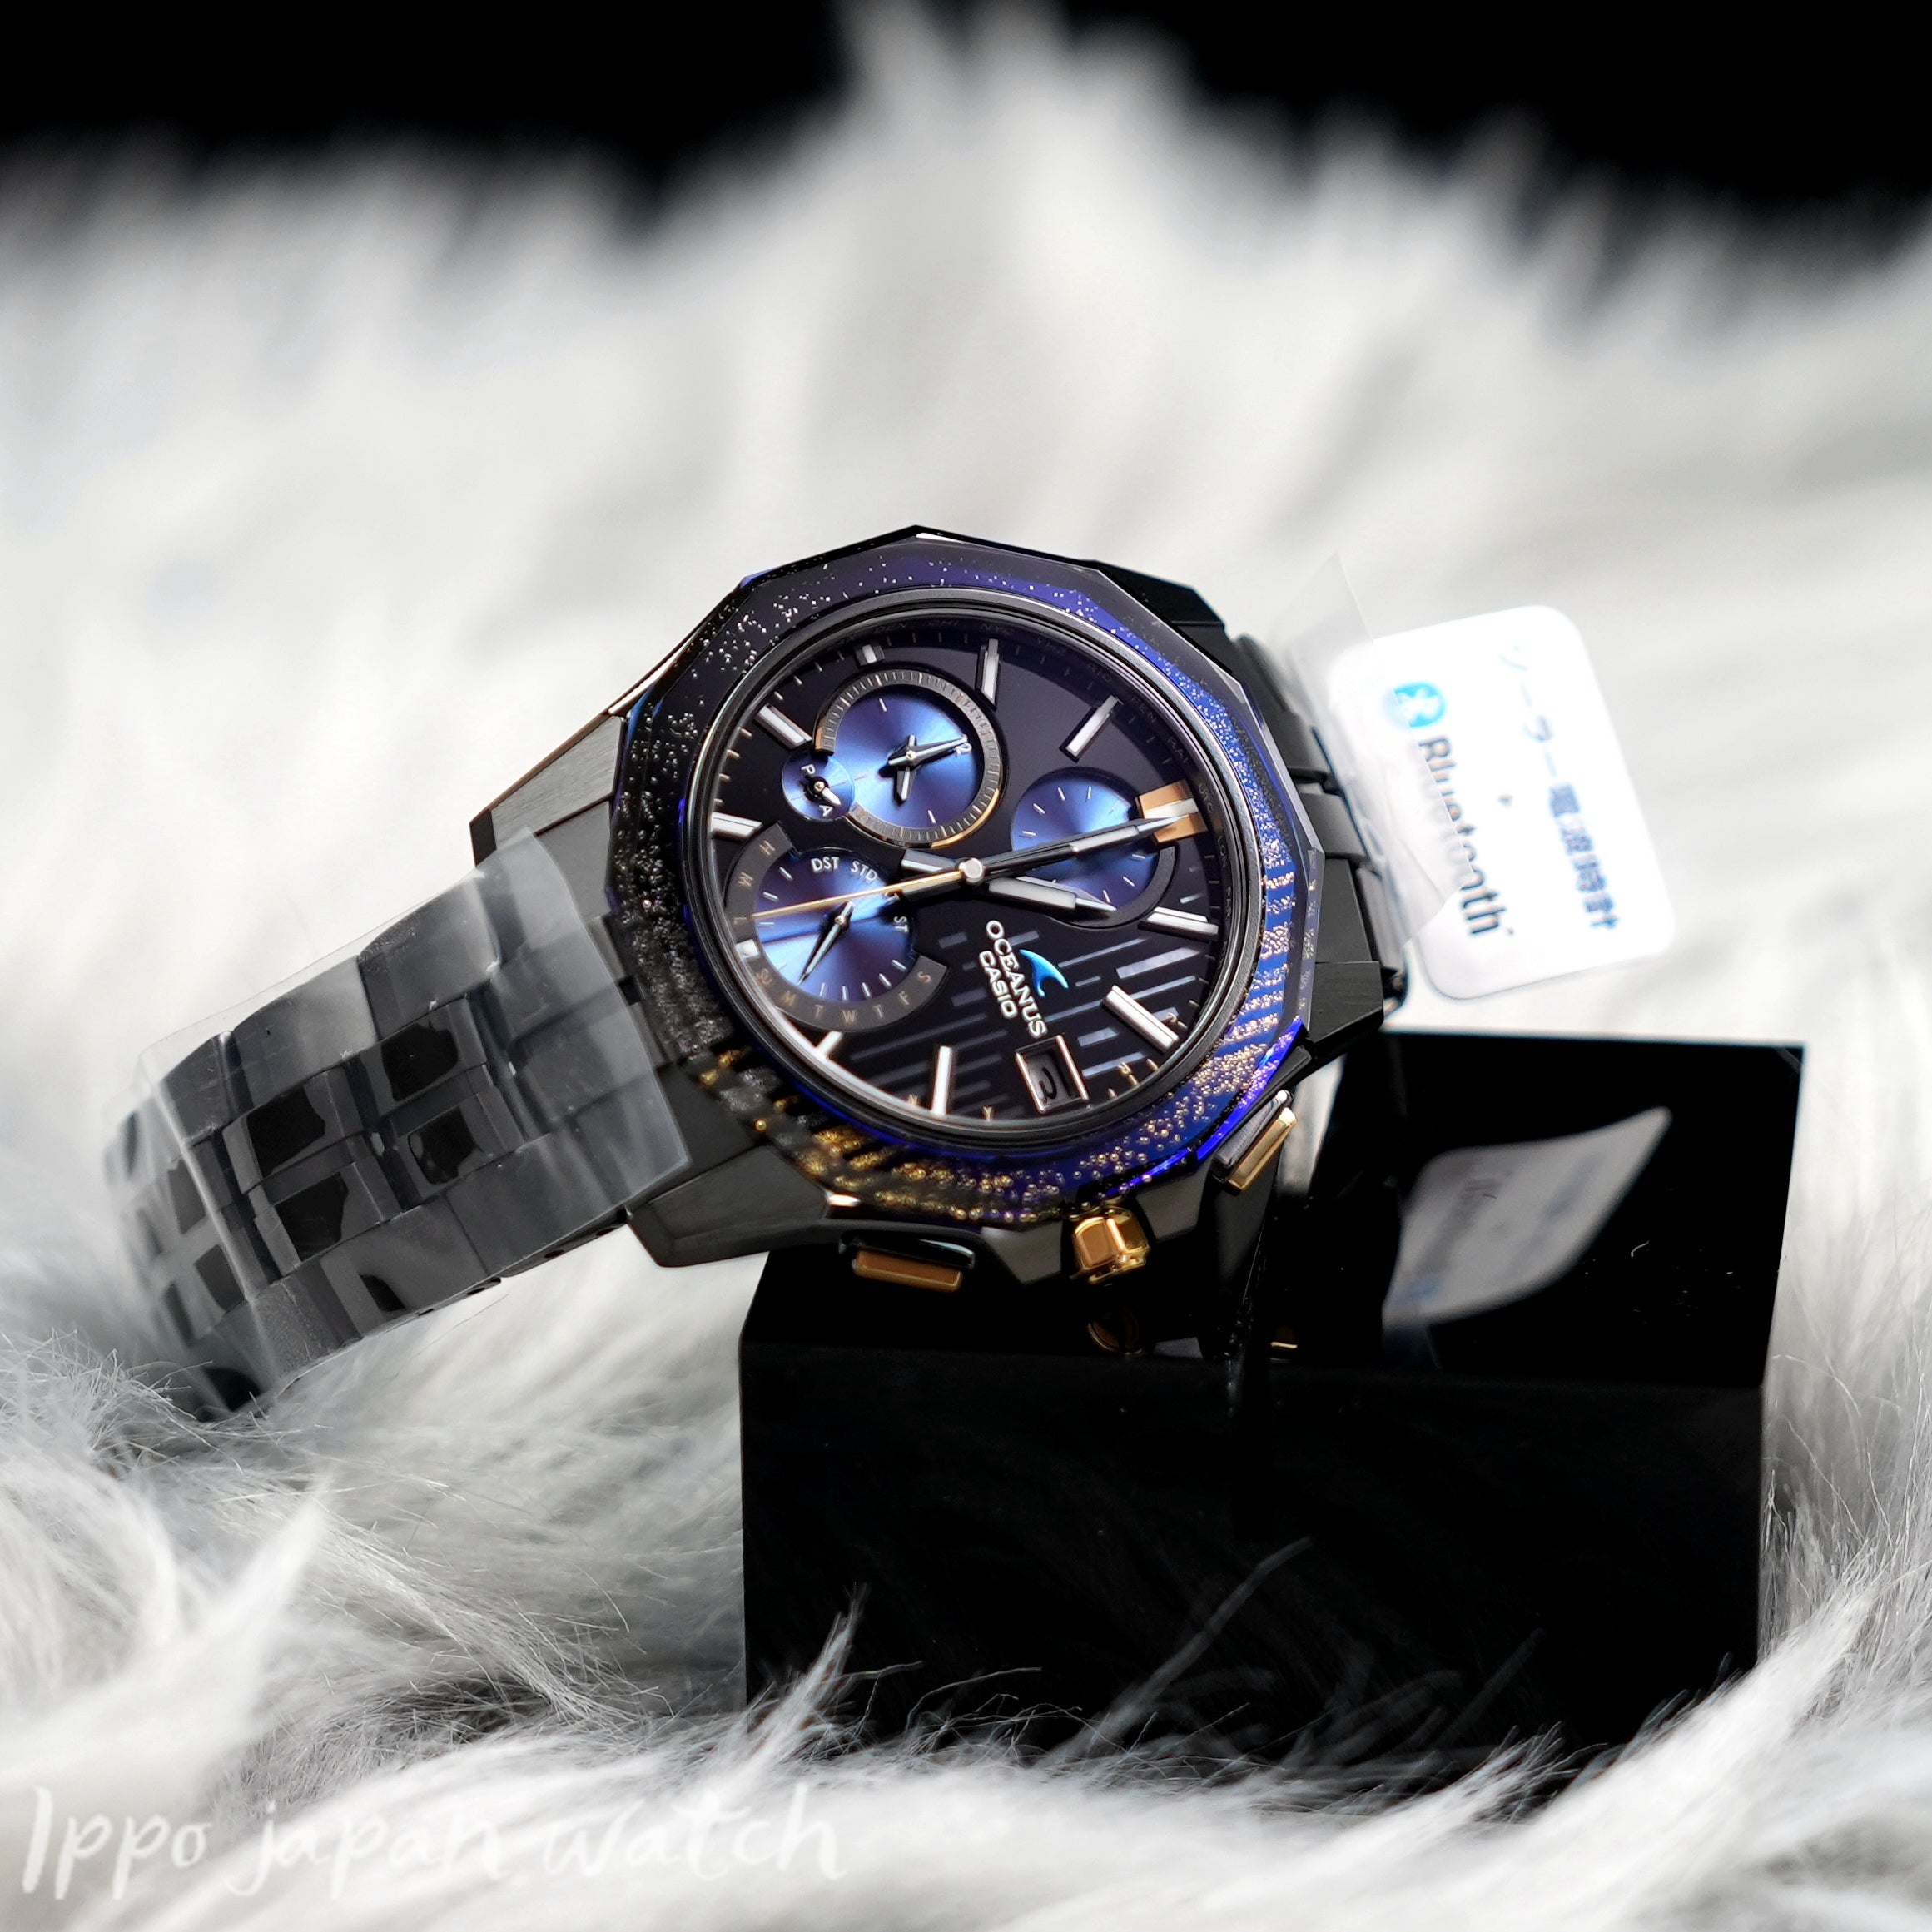 oceanus OCW-S6000MB-1AJR solar 10 watch – IPPO JAPAN WATCH